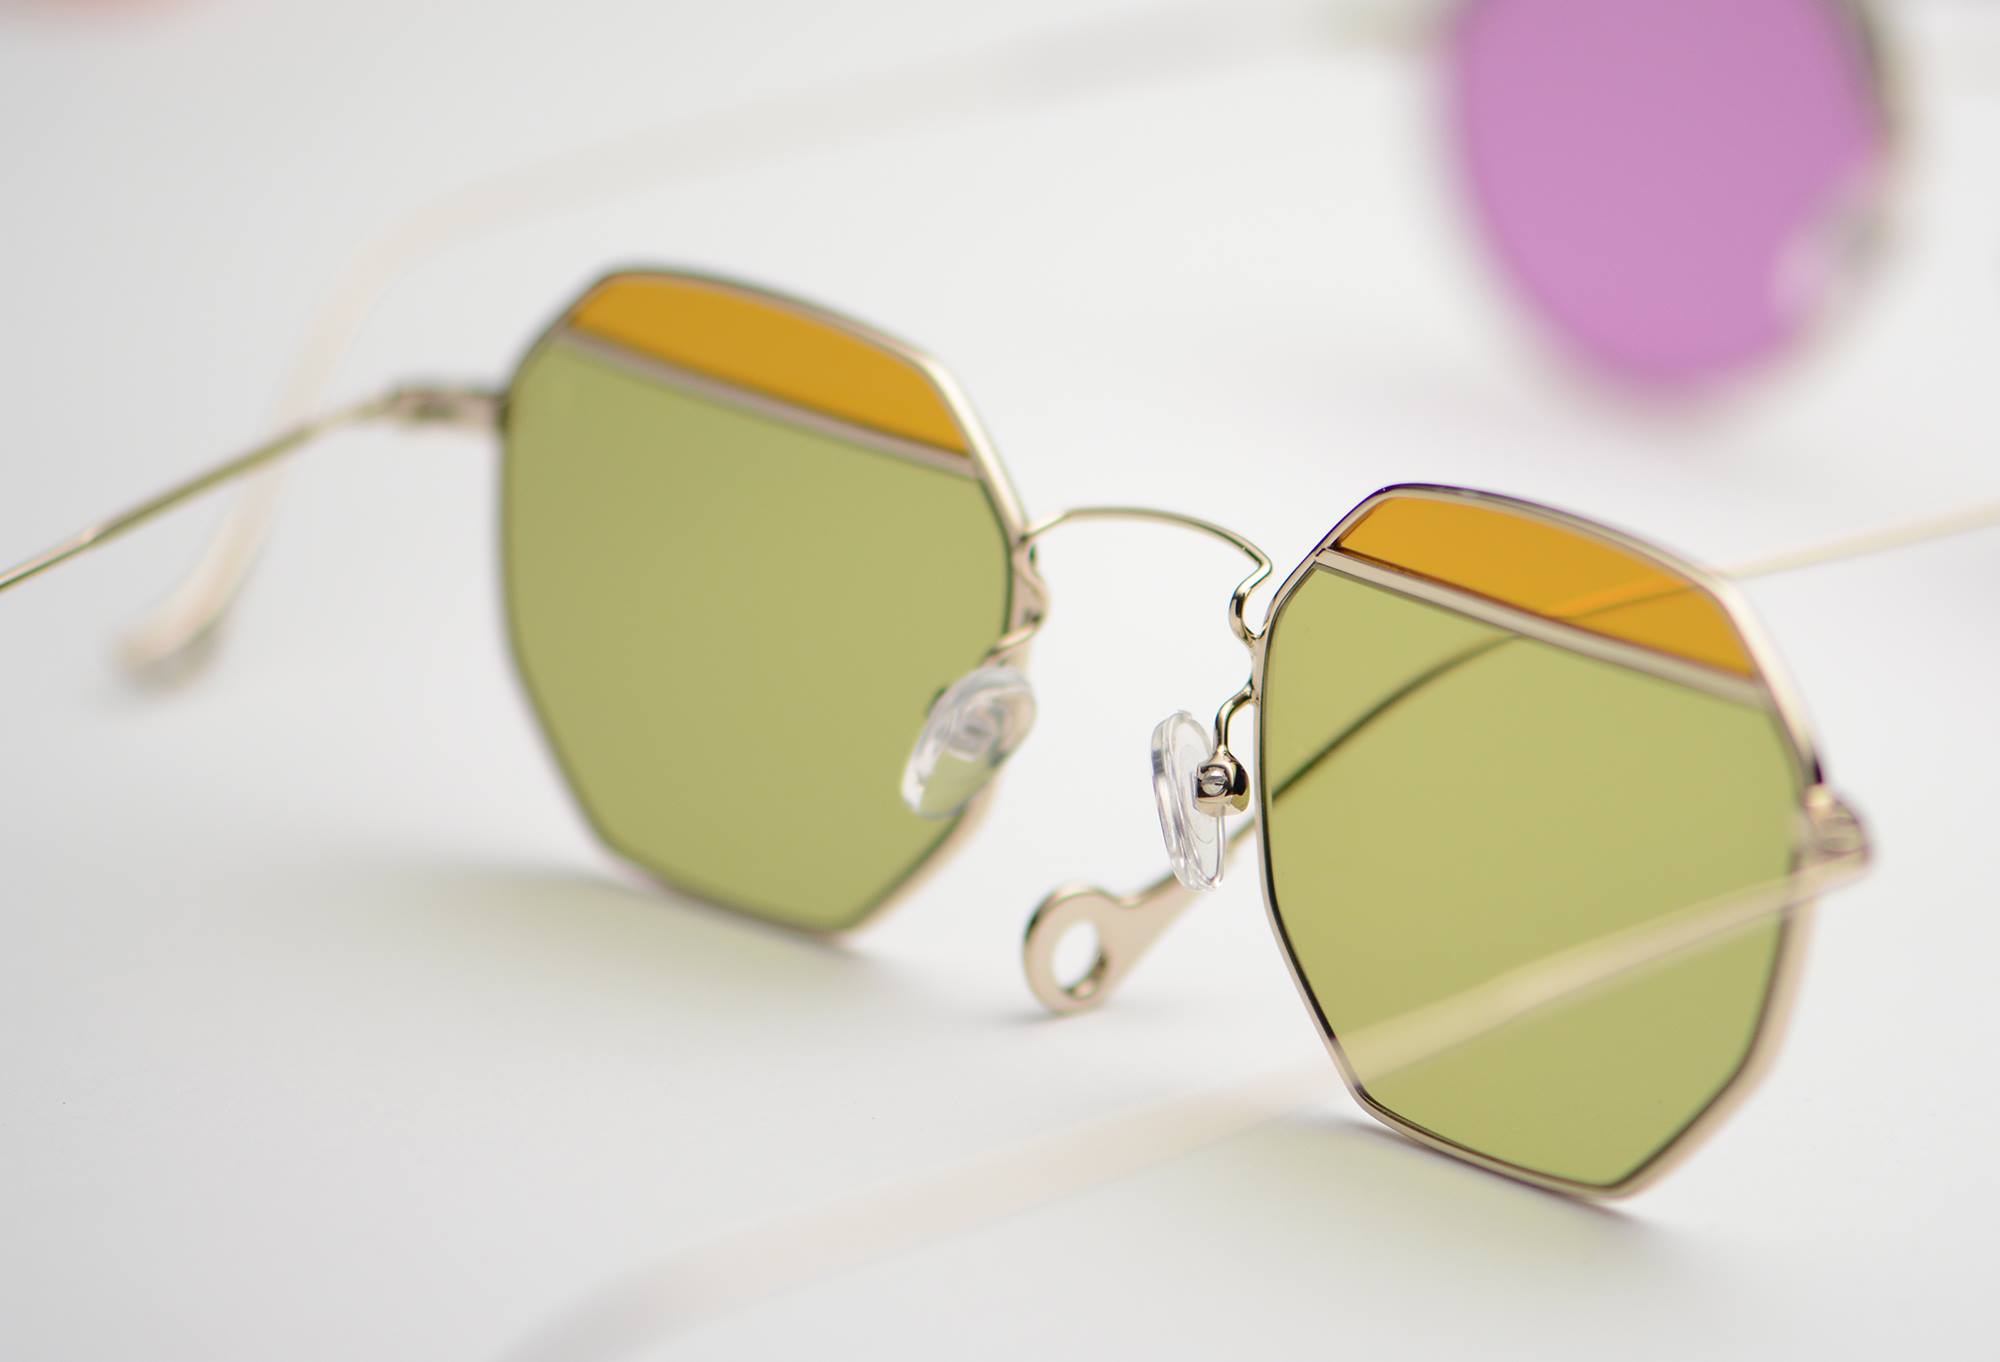 Current Obsession Peculiar Colour Blocking Sunglasses by Eyepitizer Buy Shop Online Colour Lenses Trend 2018 Eyeglasses Cheap Designer